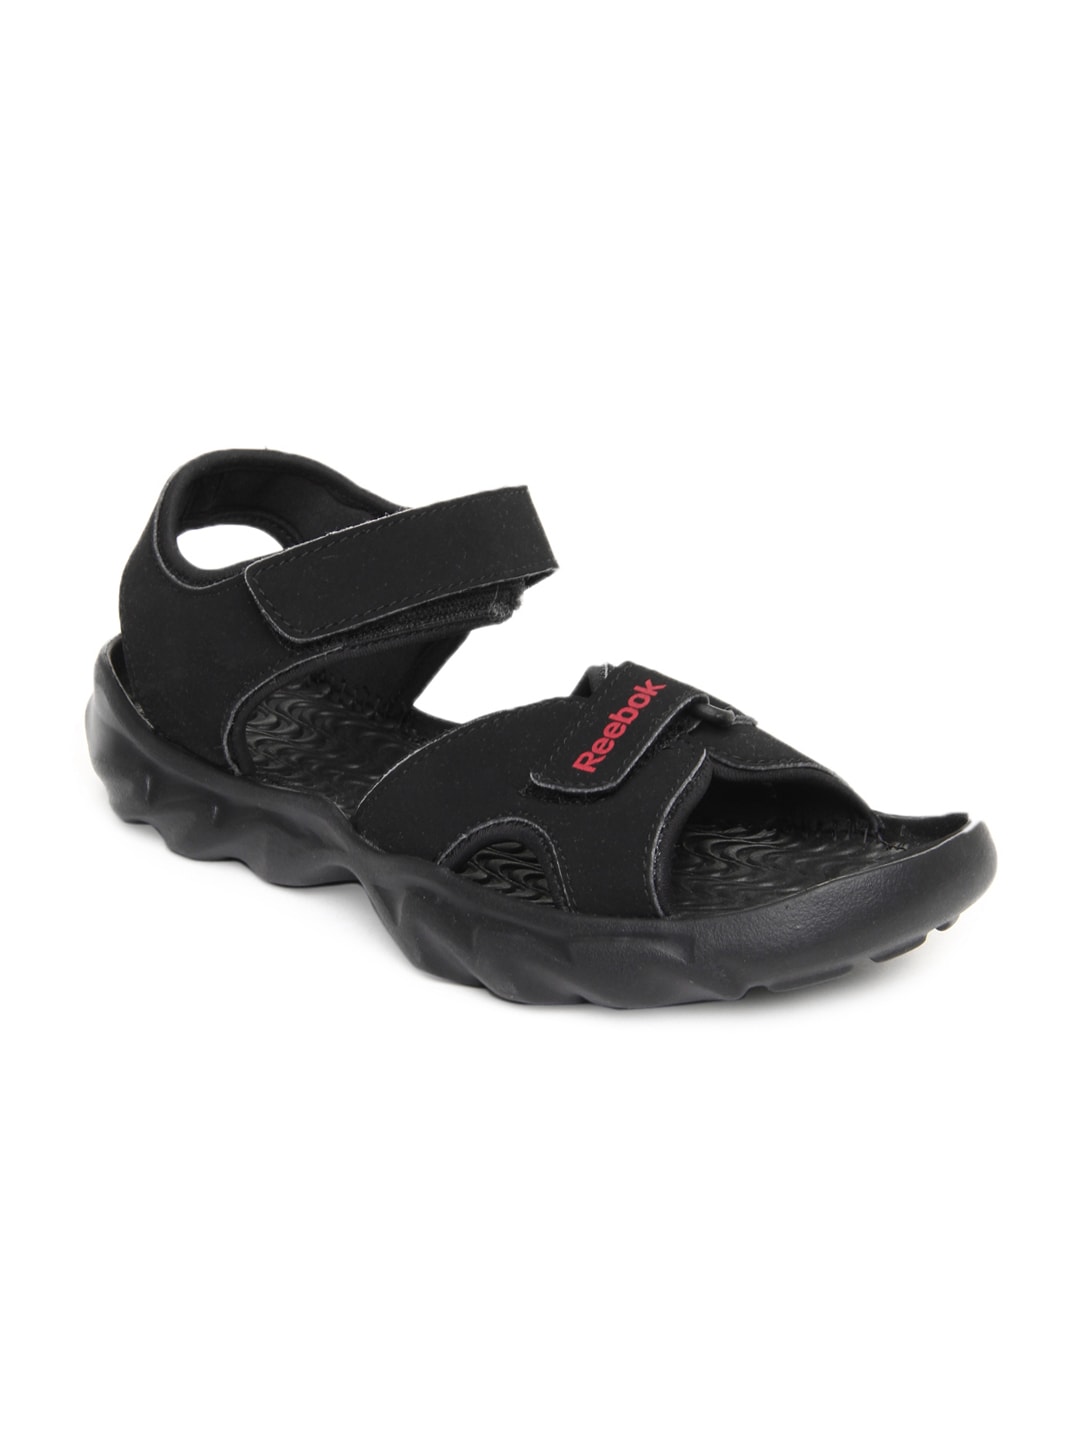 Reebok Unisex Black Sports Sandals